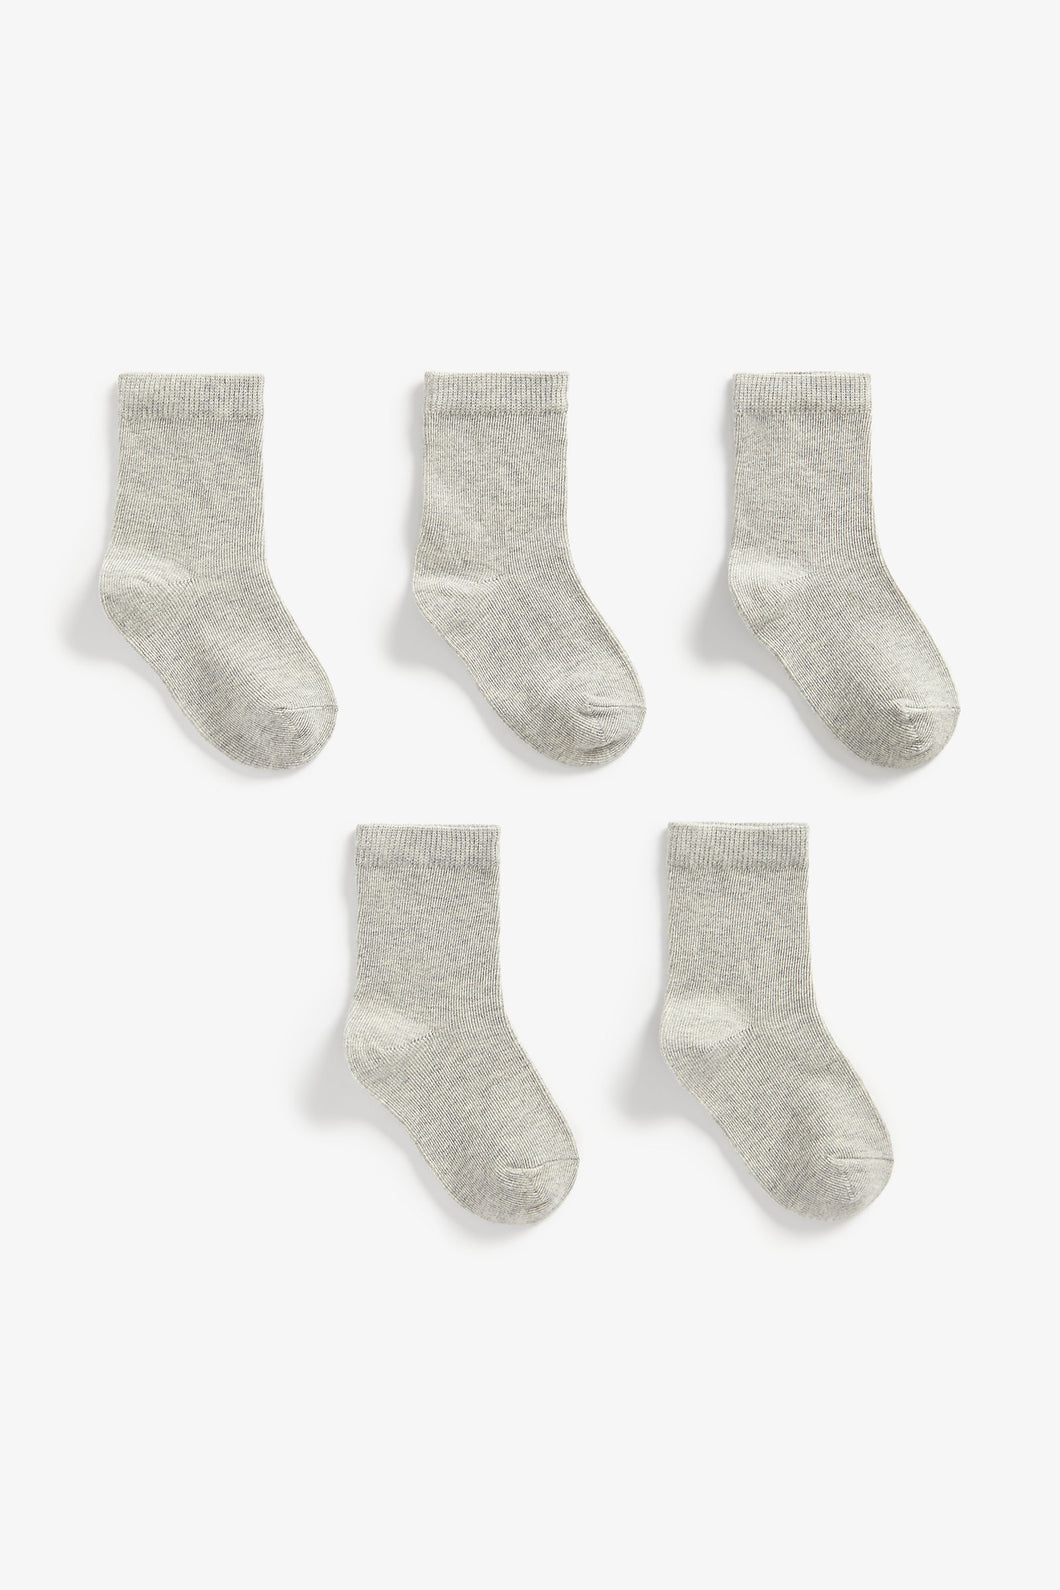 Mothercare Grey Socks - 5 Pack